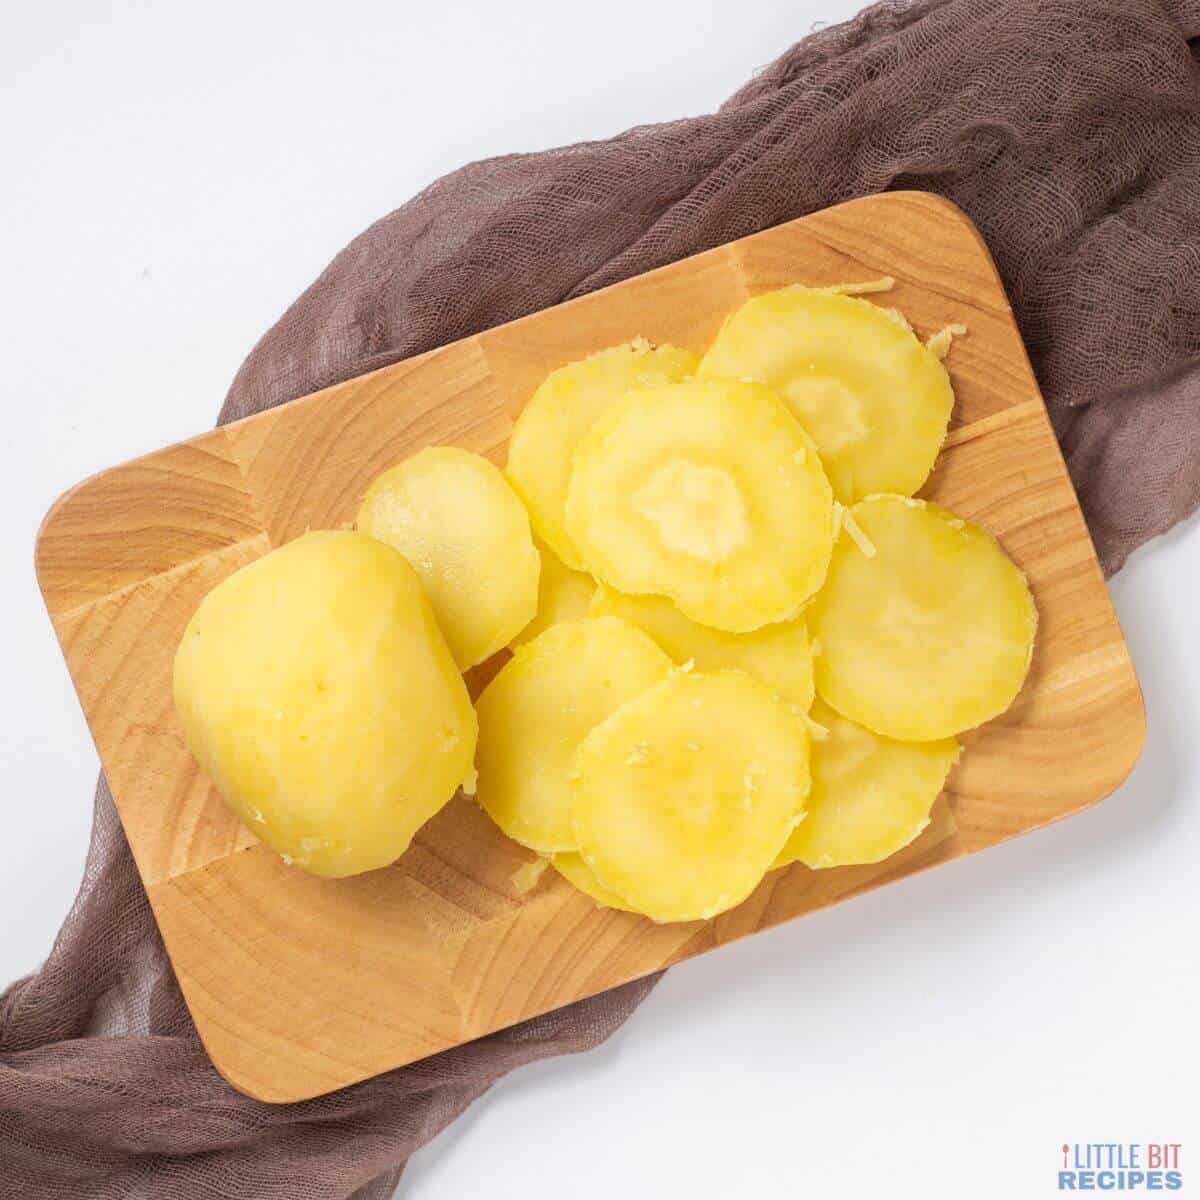 sliced potatoes on cutting board.